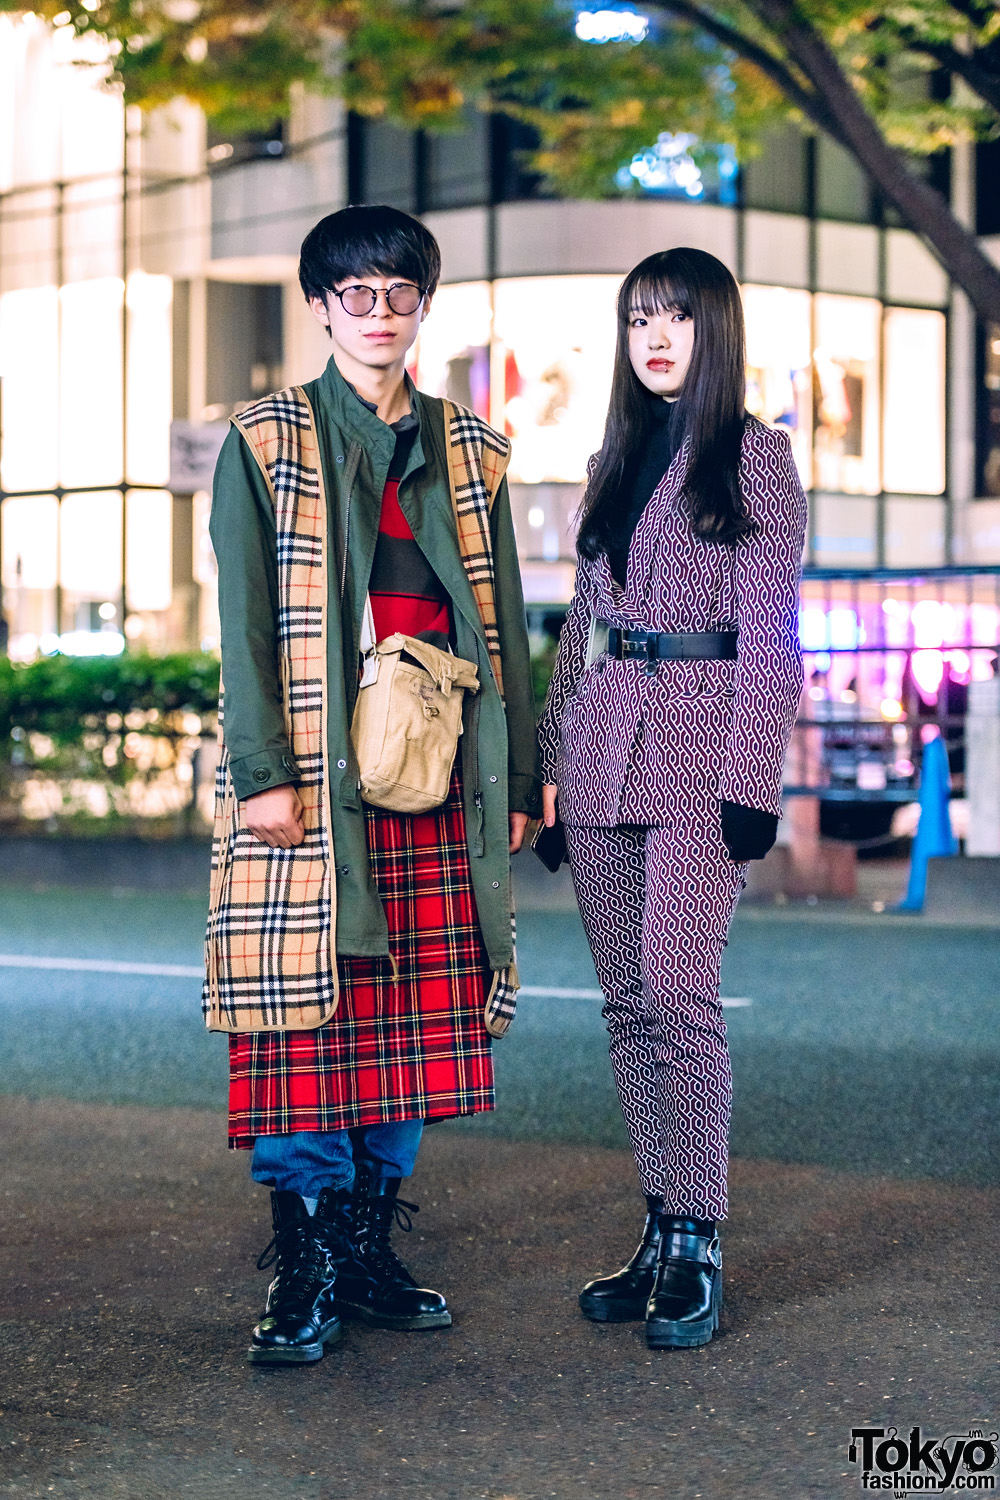 Mixed Prints Japanese Street Styles w/ Burberry Plaid, Geometric Suit ...